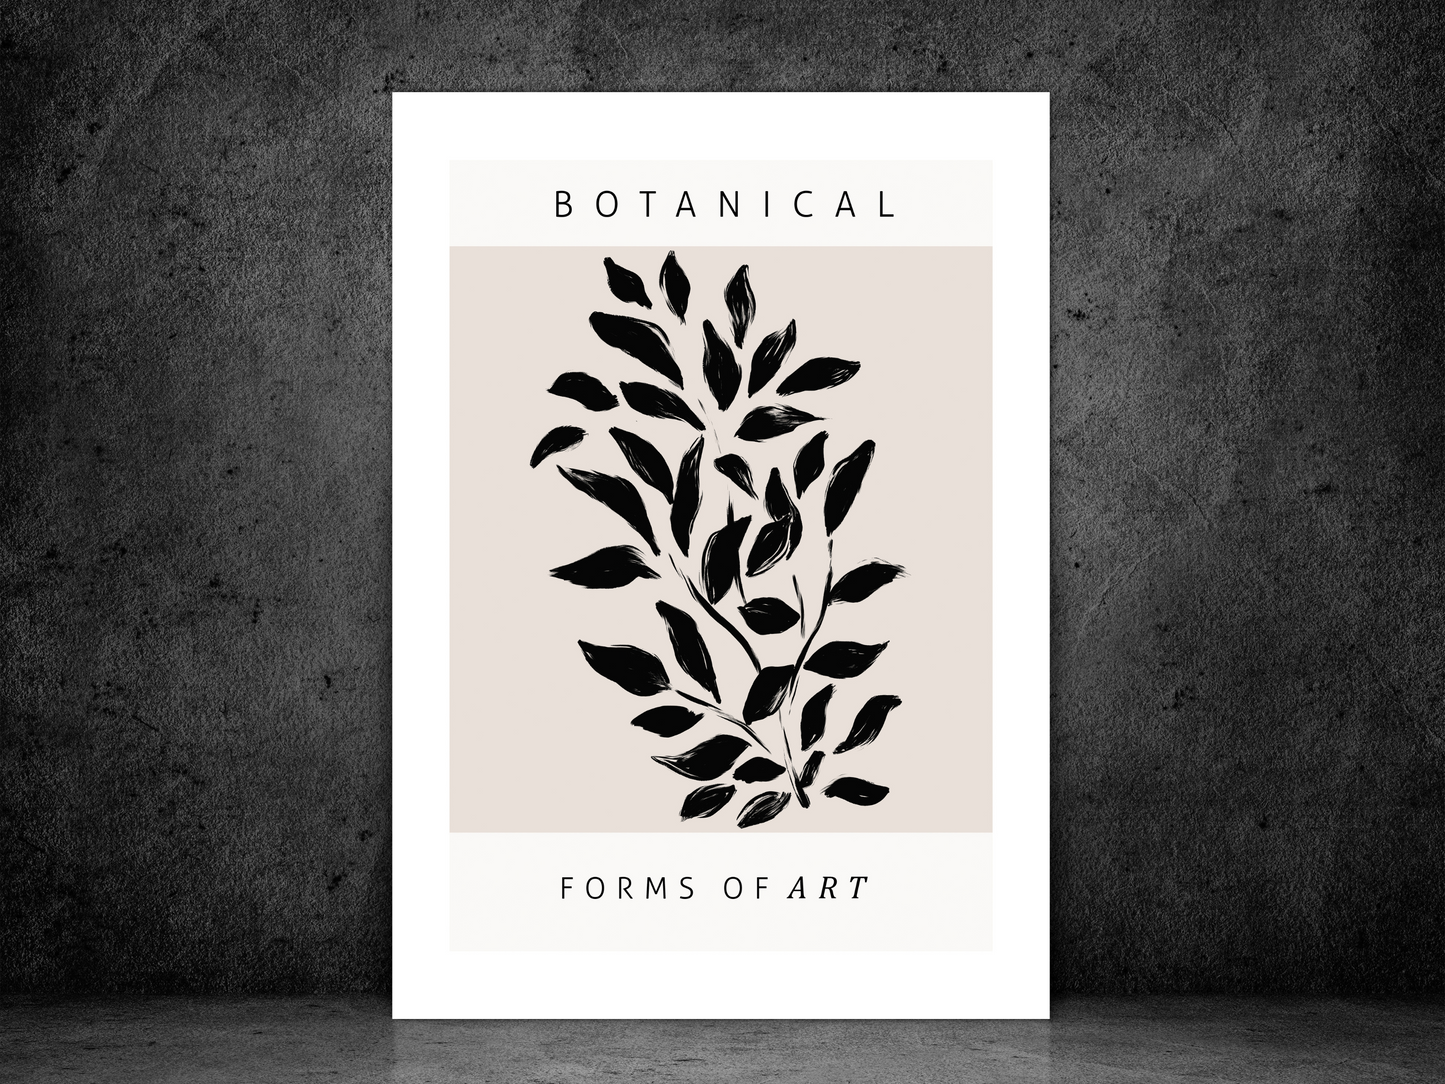 Botanical Forms of Art